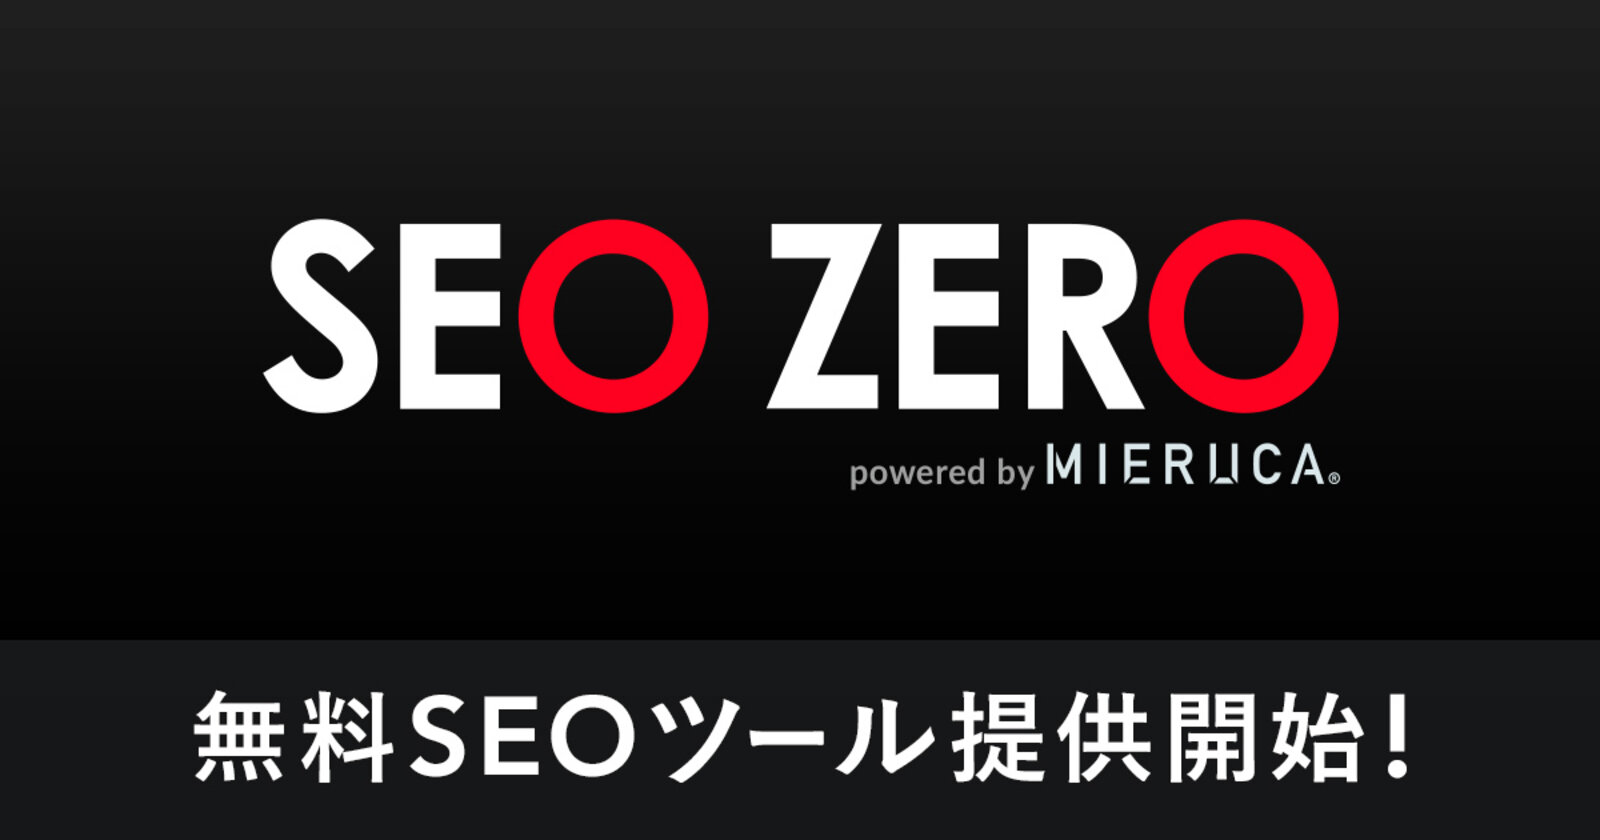 Faber CompanyがSEOツール「SEO ZERO」を無料提供、「競合 